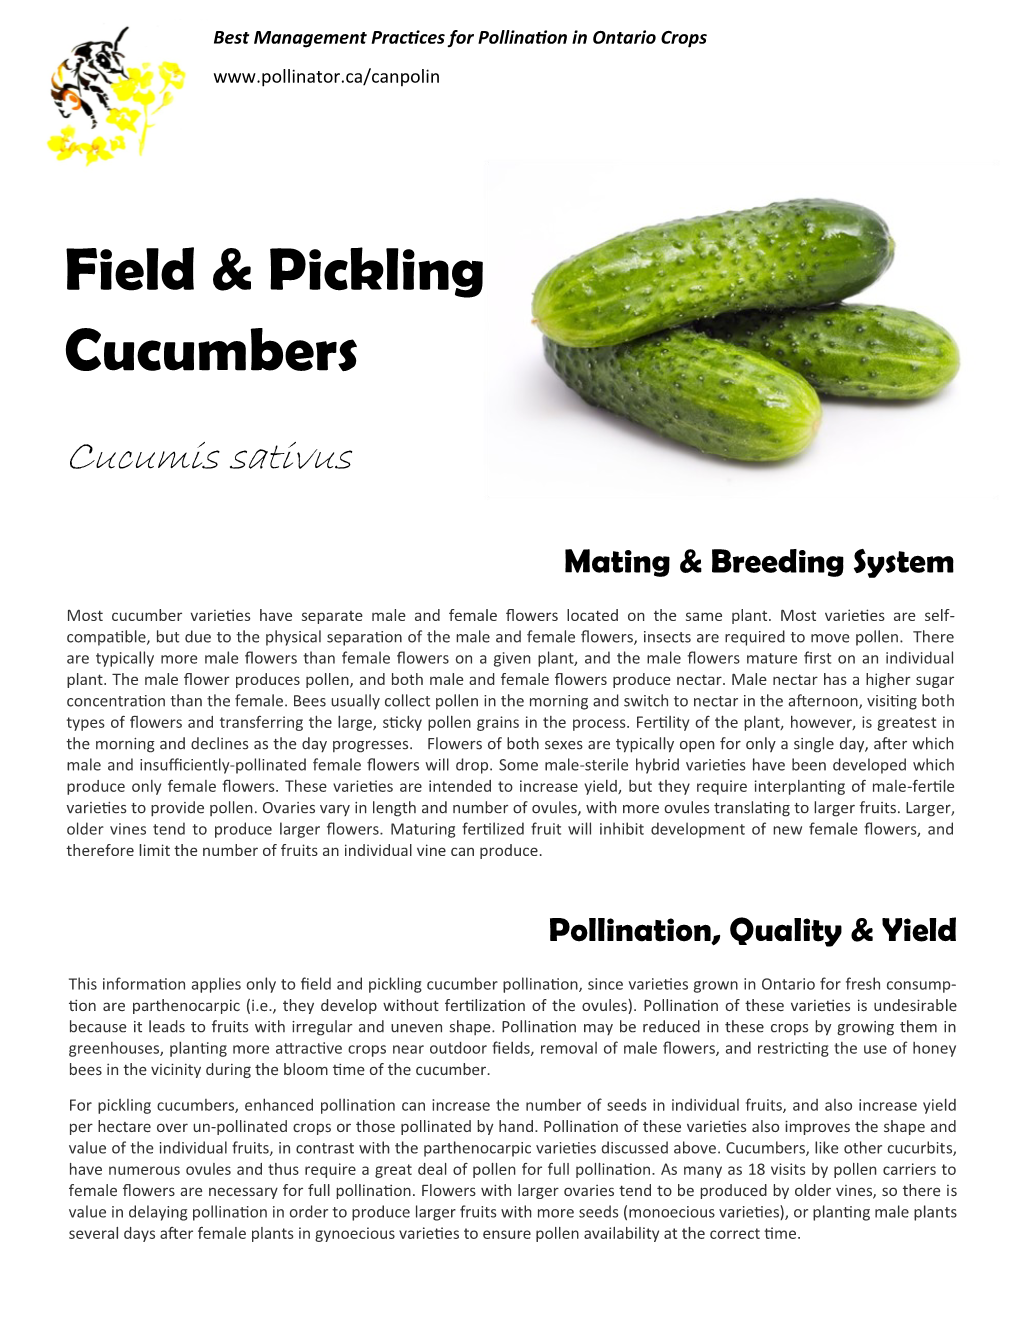 Field & Pickling Cucumbers